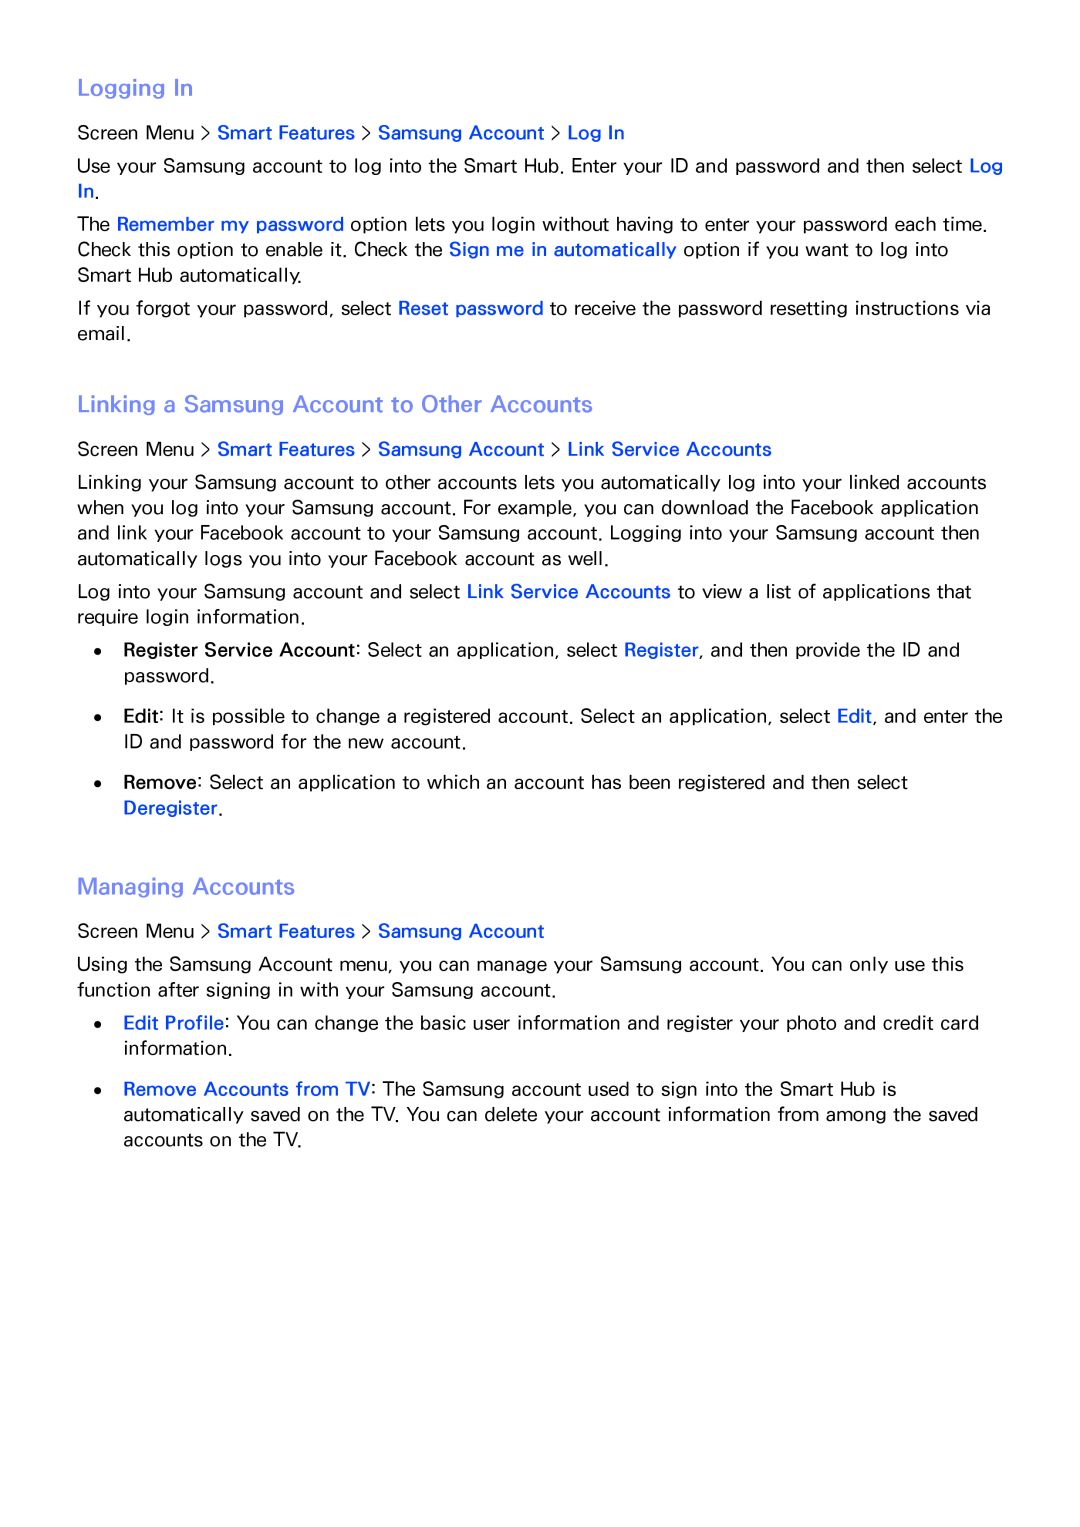 Samsung SEK-1000 manual Logging In, Linking a Samsung Account to Other Accounts, Managing Accounts 